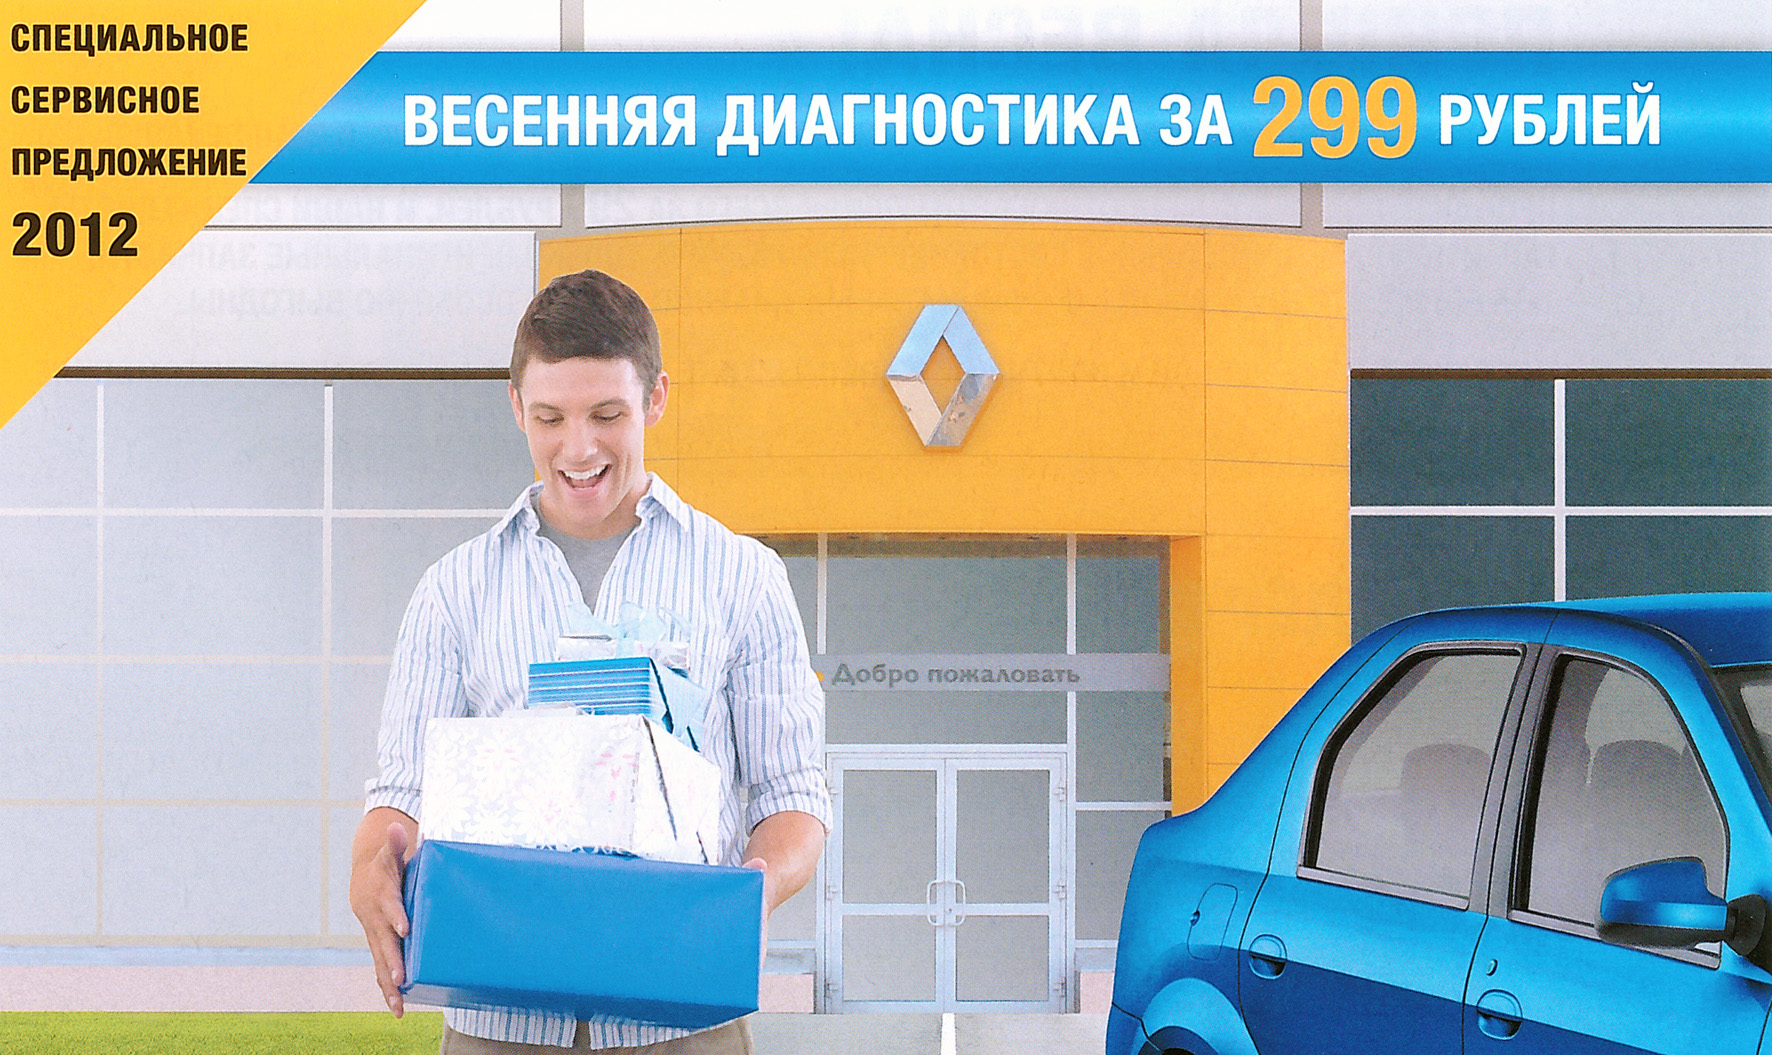 Весенняя диагностика за 299 рублей в Автоцентре «ОВОД»